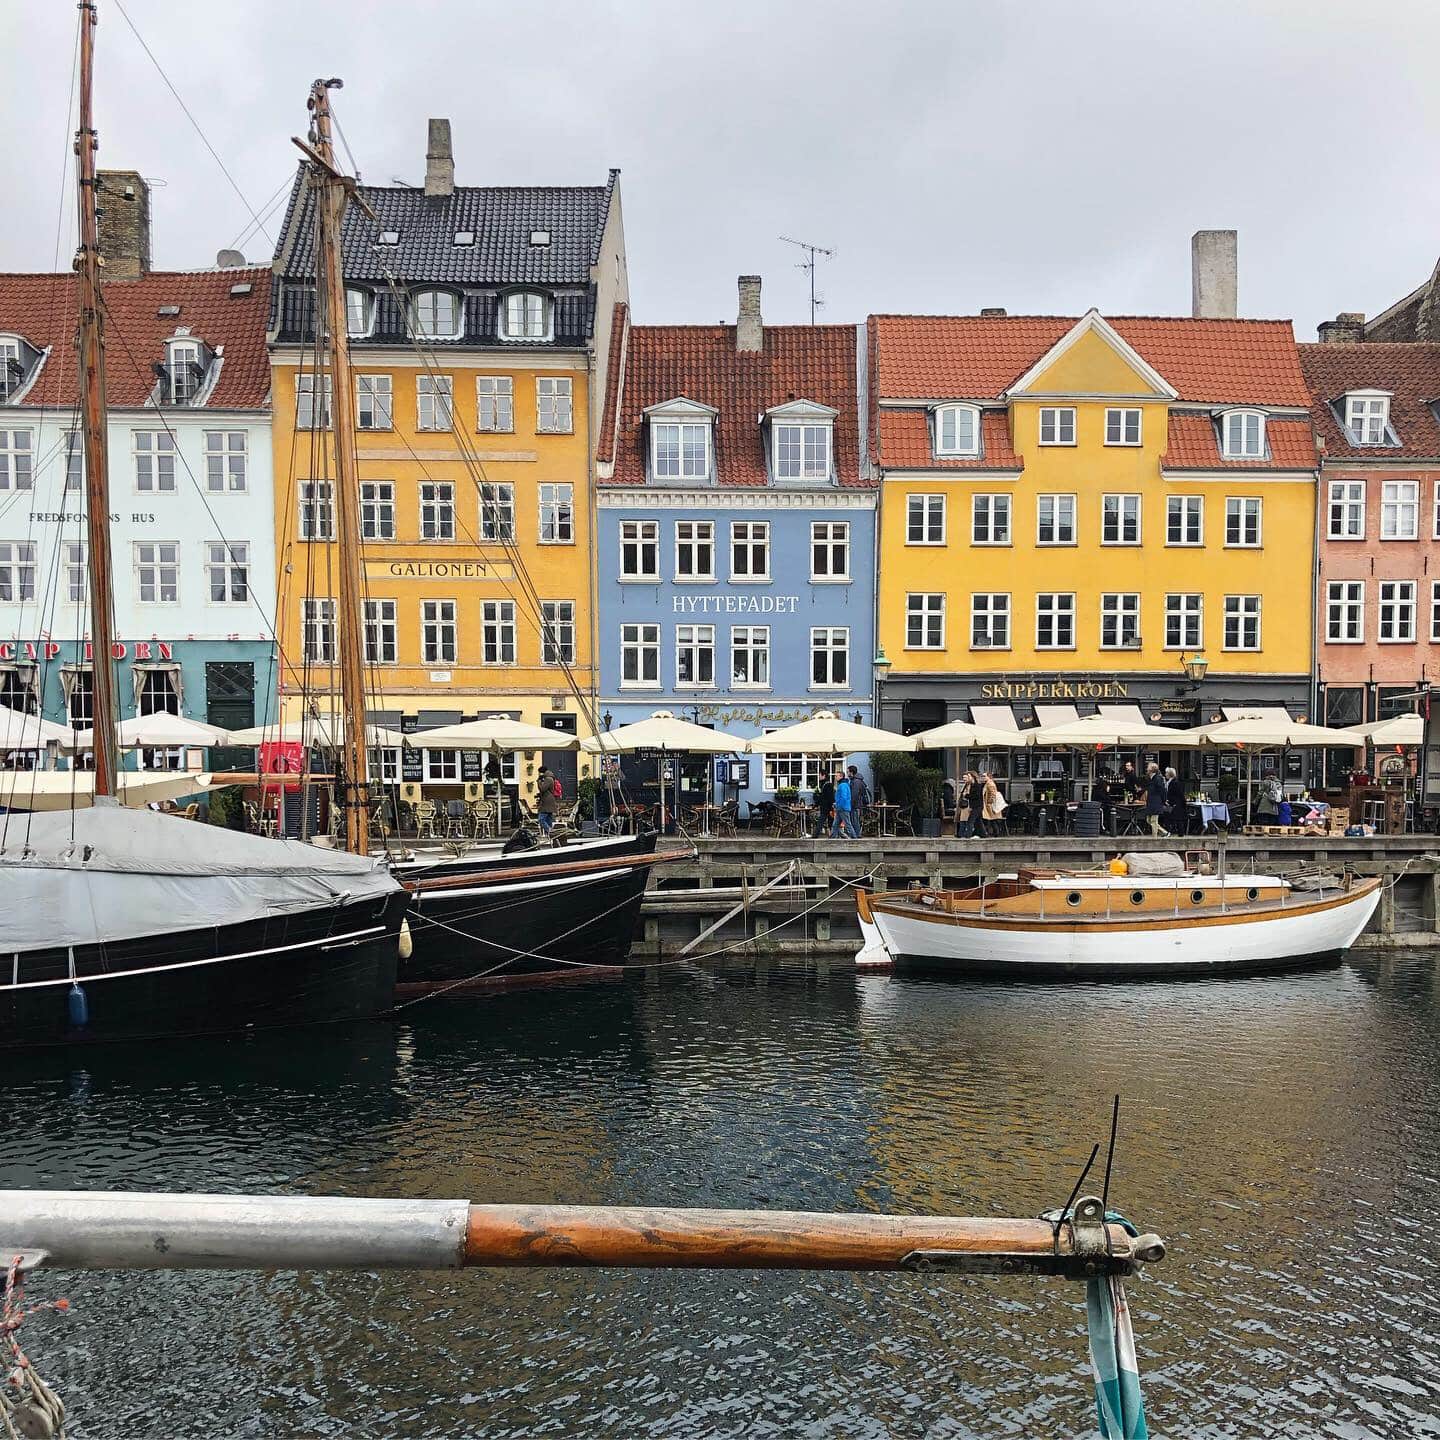 Copenhagen city guide - The House That Lars Built